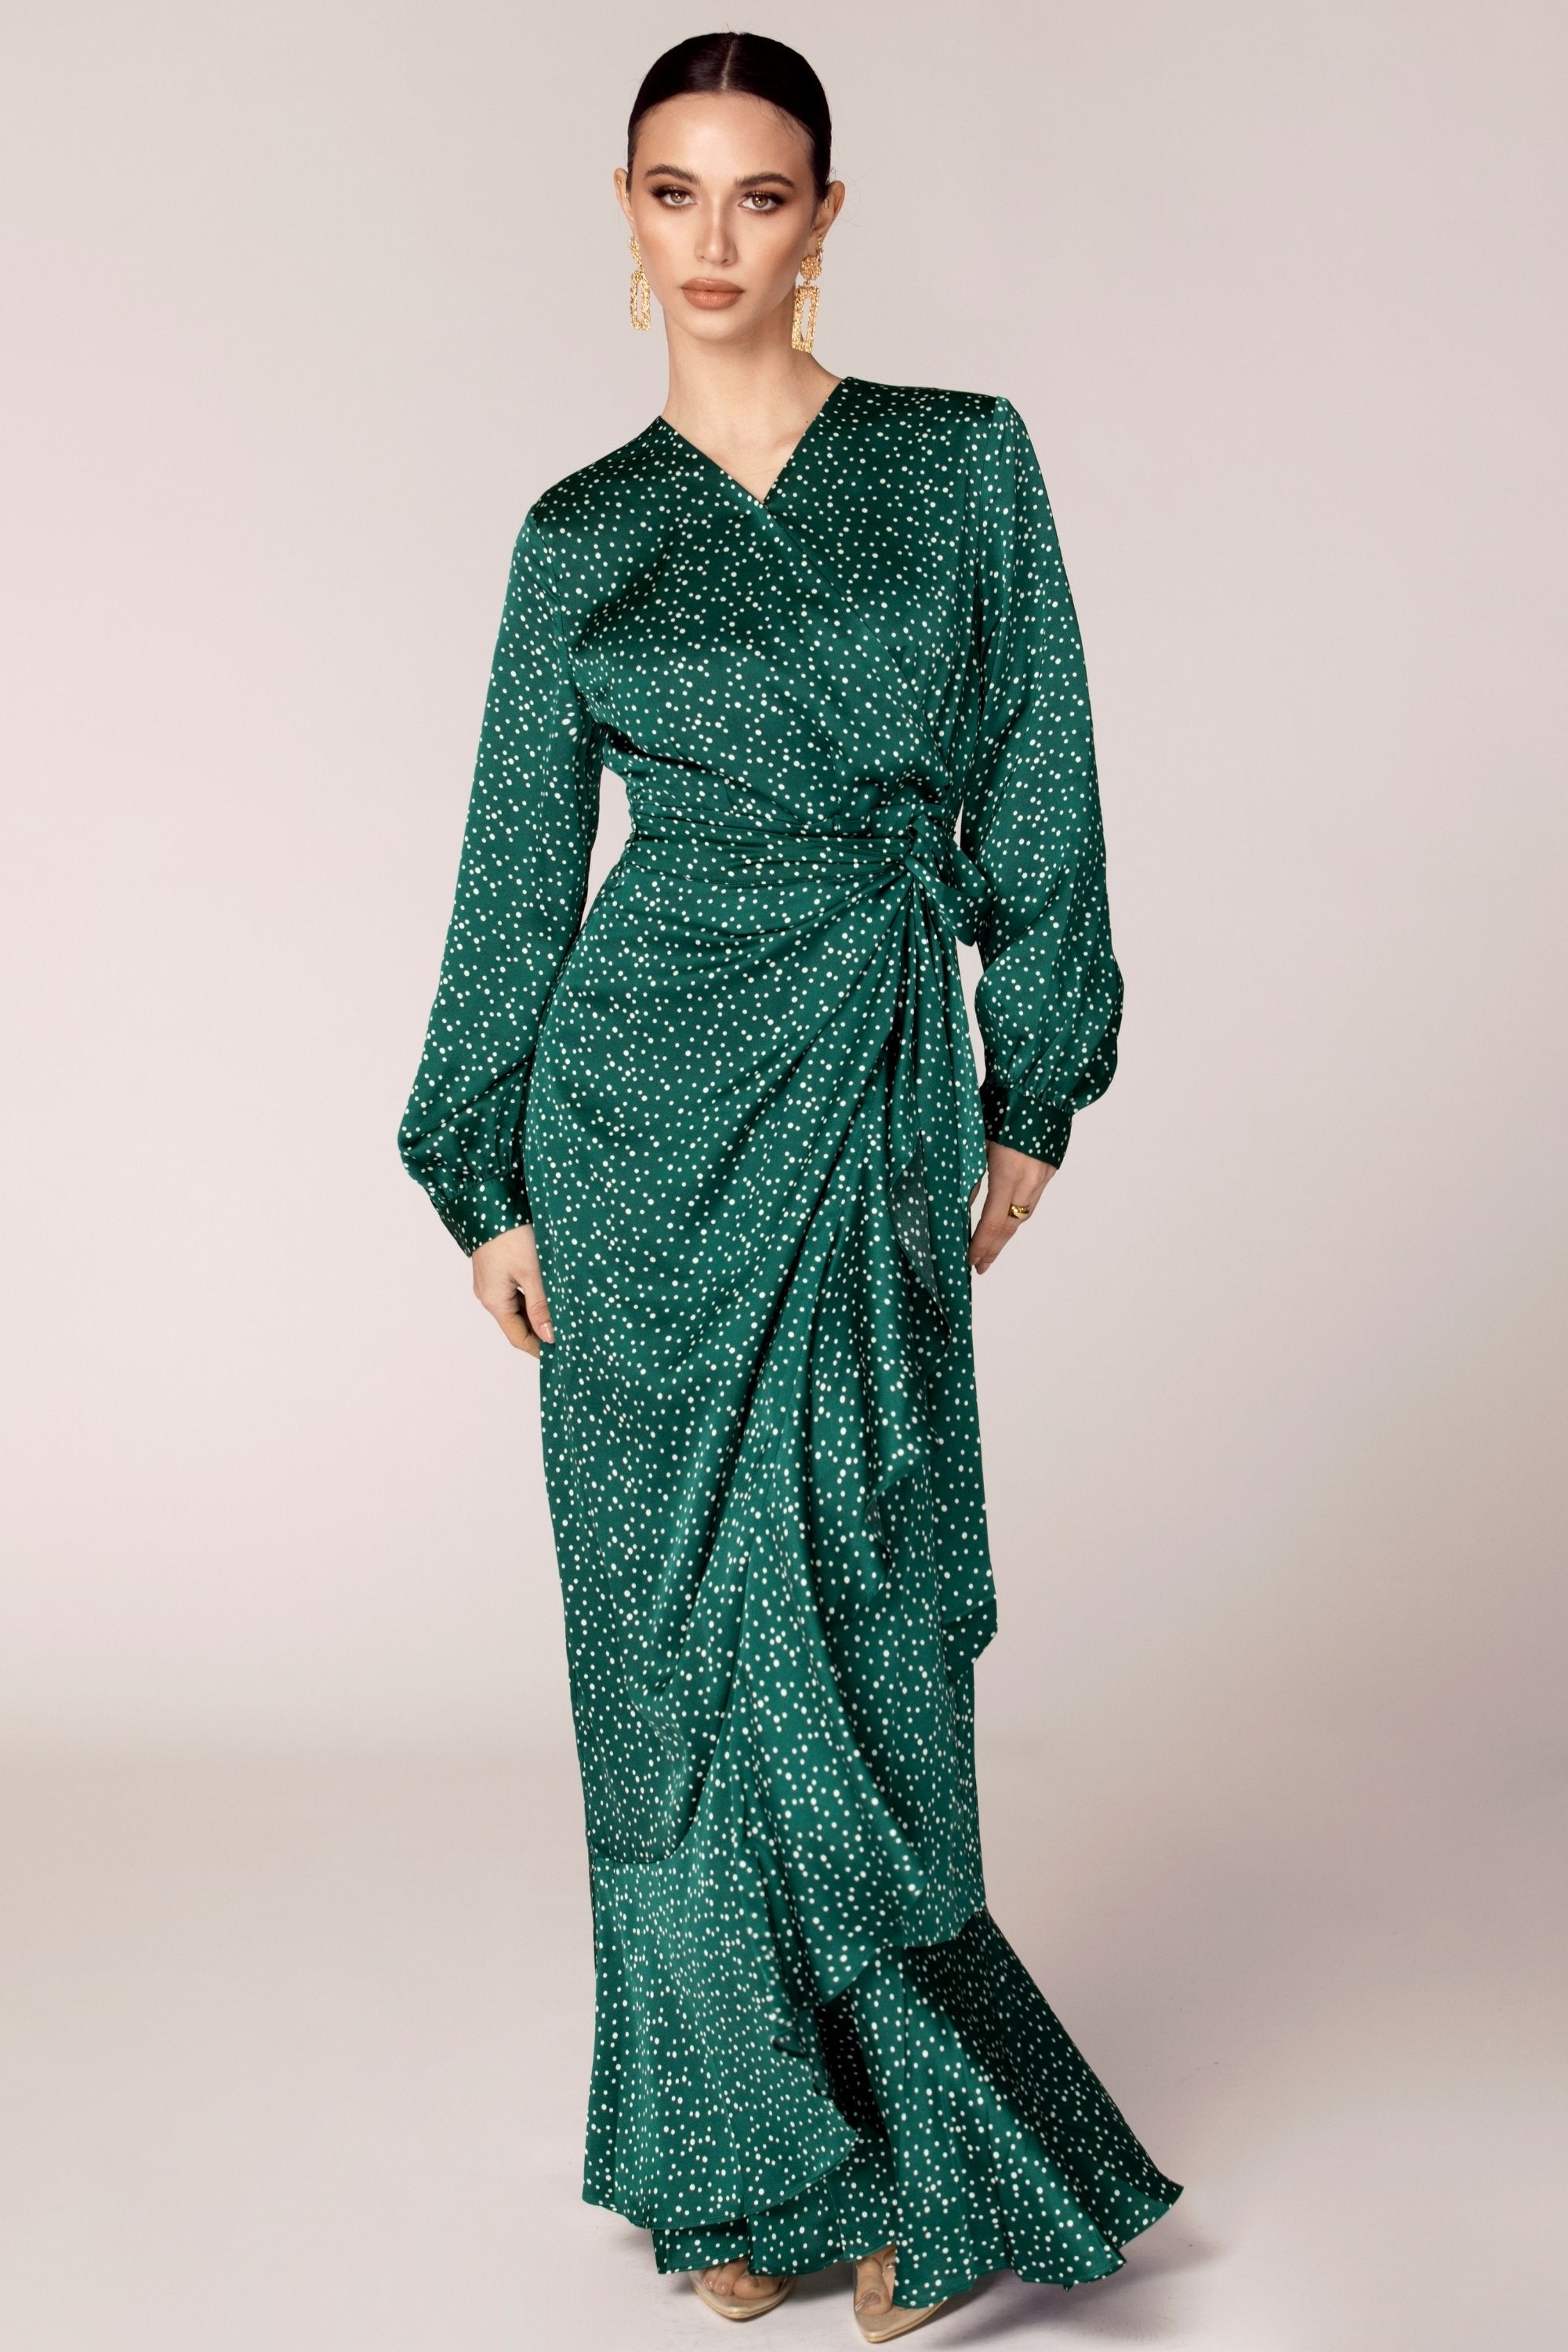 Emerald Polka Dot Satin Wrap Maxi Dress Dresses Veiled Collection 